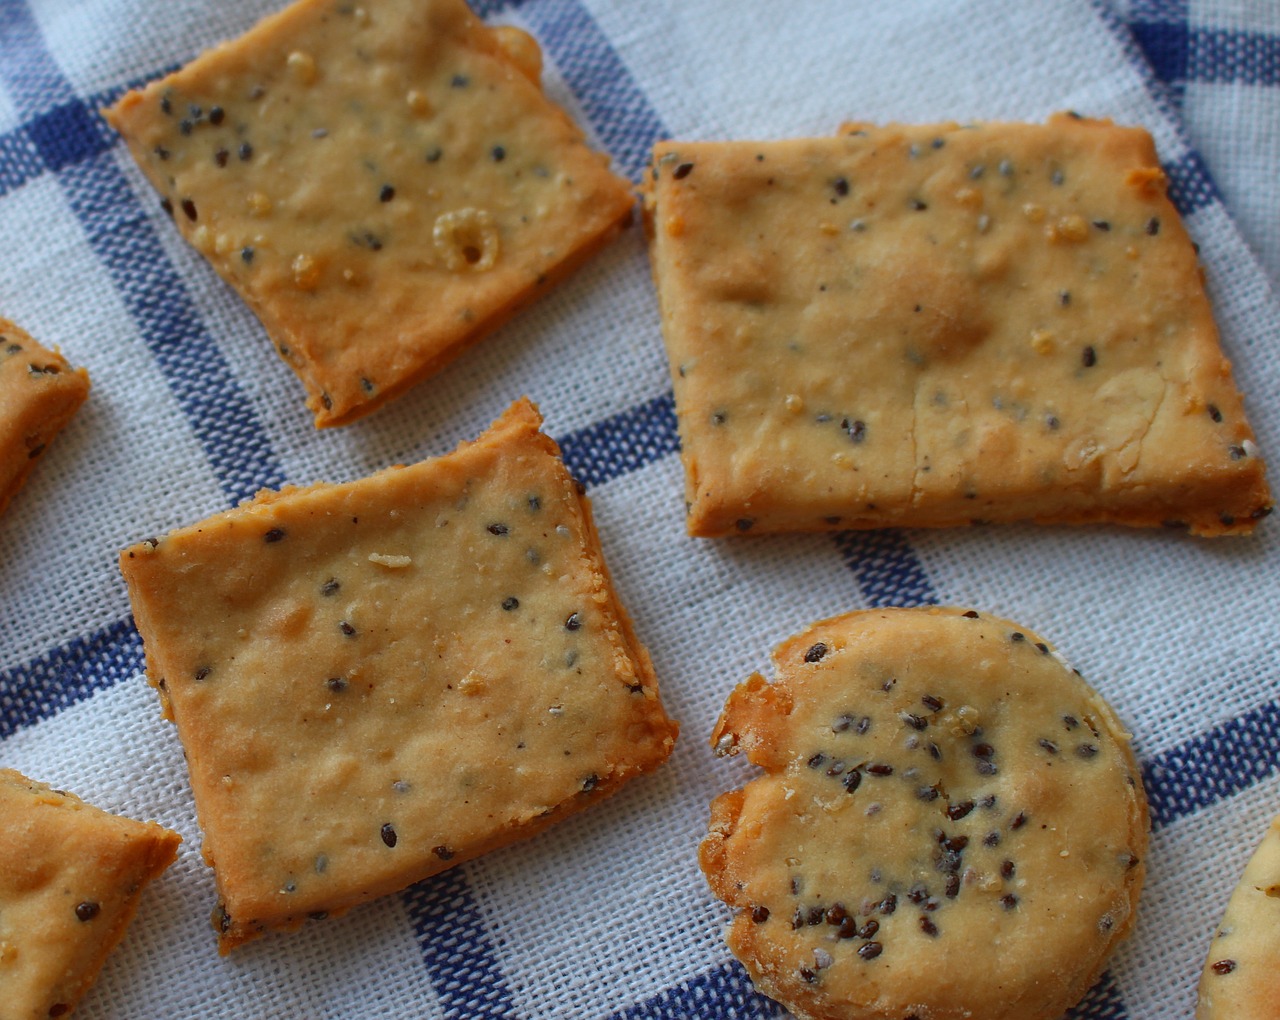 Crackers Just Like Saltines - Homemade